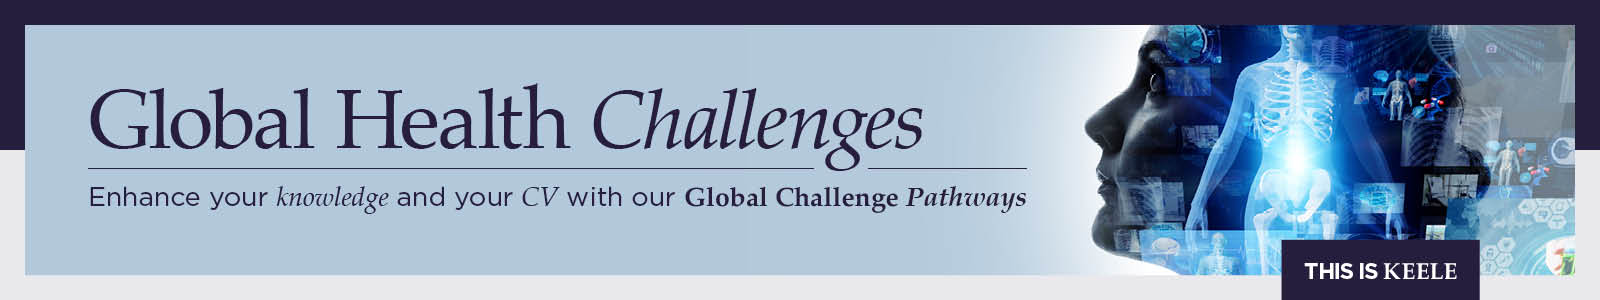 Global Health Challenges banner image